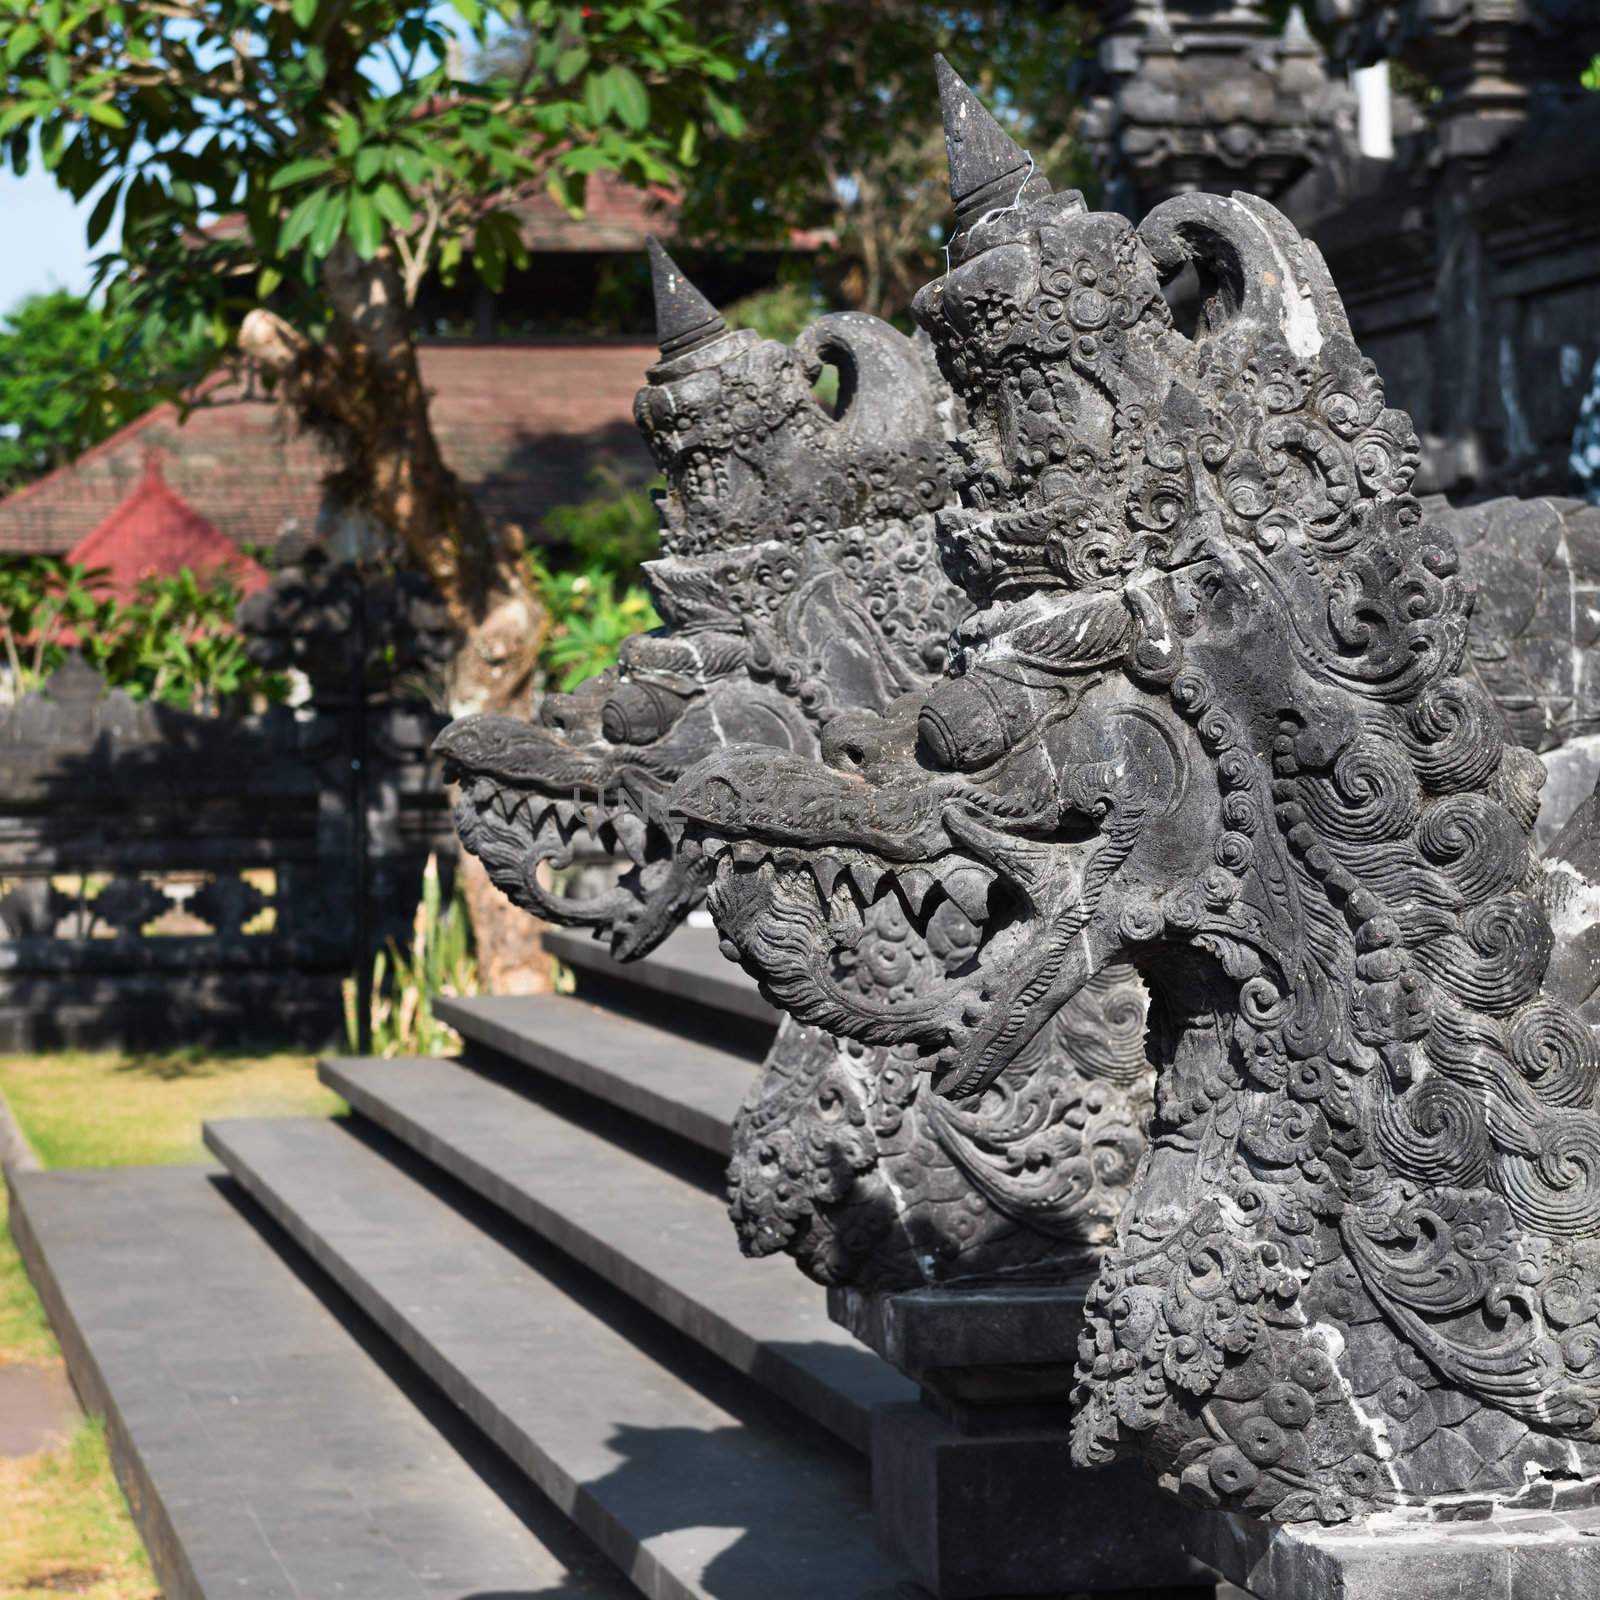 Traditional Balinese stone dragon image in Goa Lawah Bat Cave temple, Bali, Indonesia